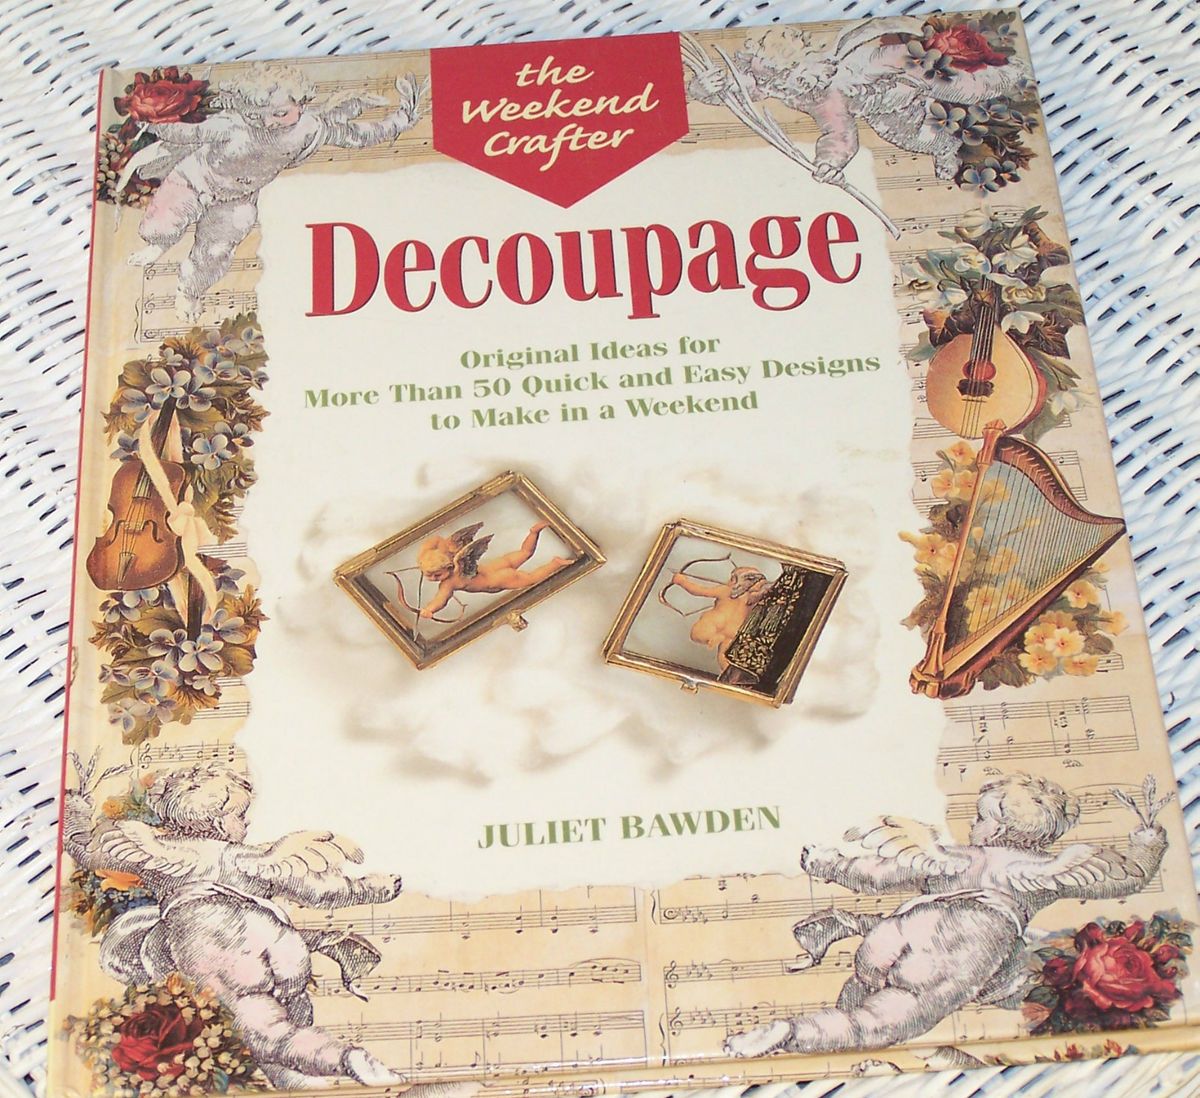   Weekend Crafter DECOUPAGE, Juliet Bawden, Very Good Cond. (Hardcover